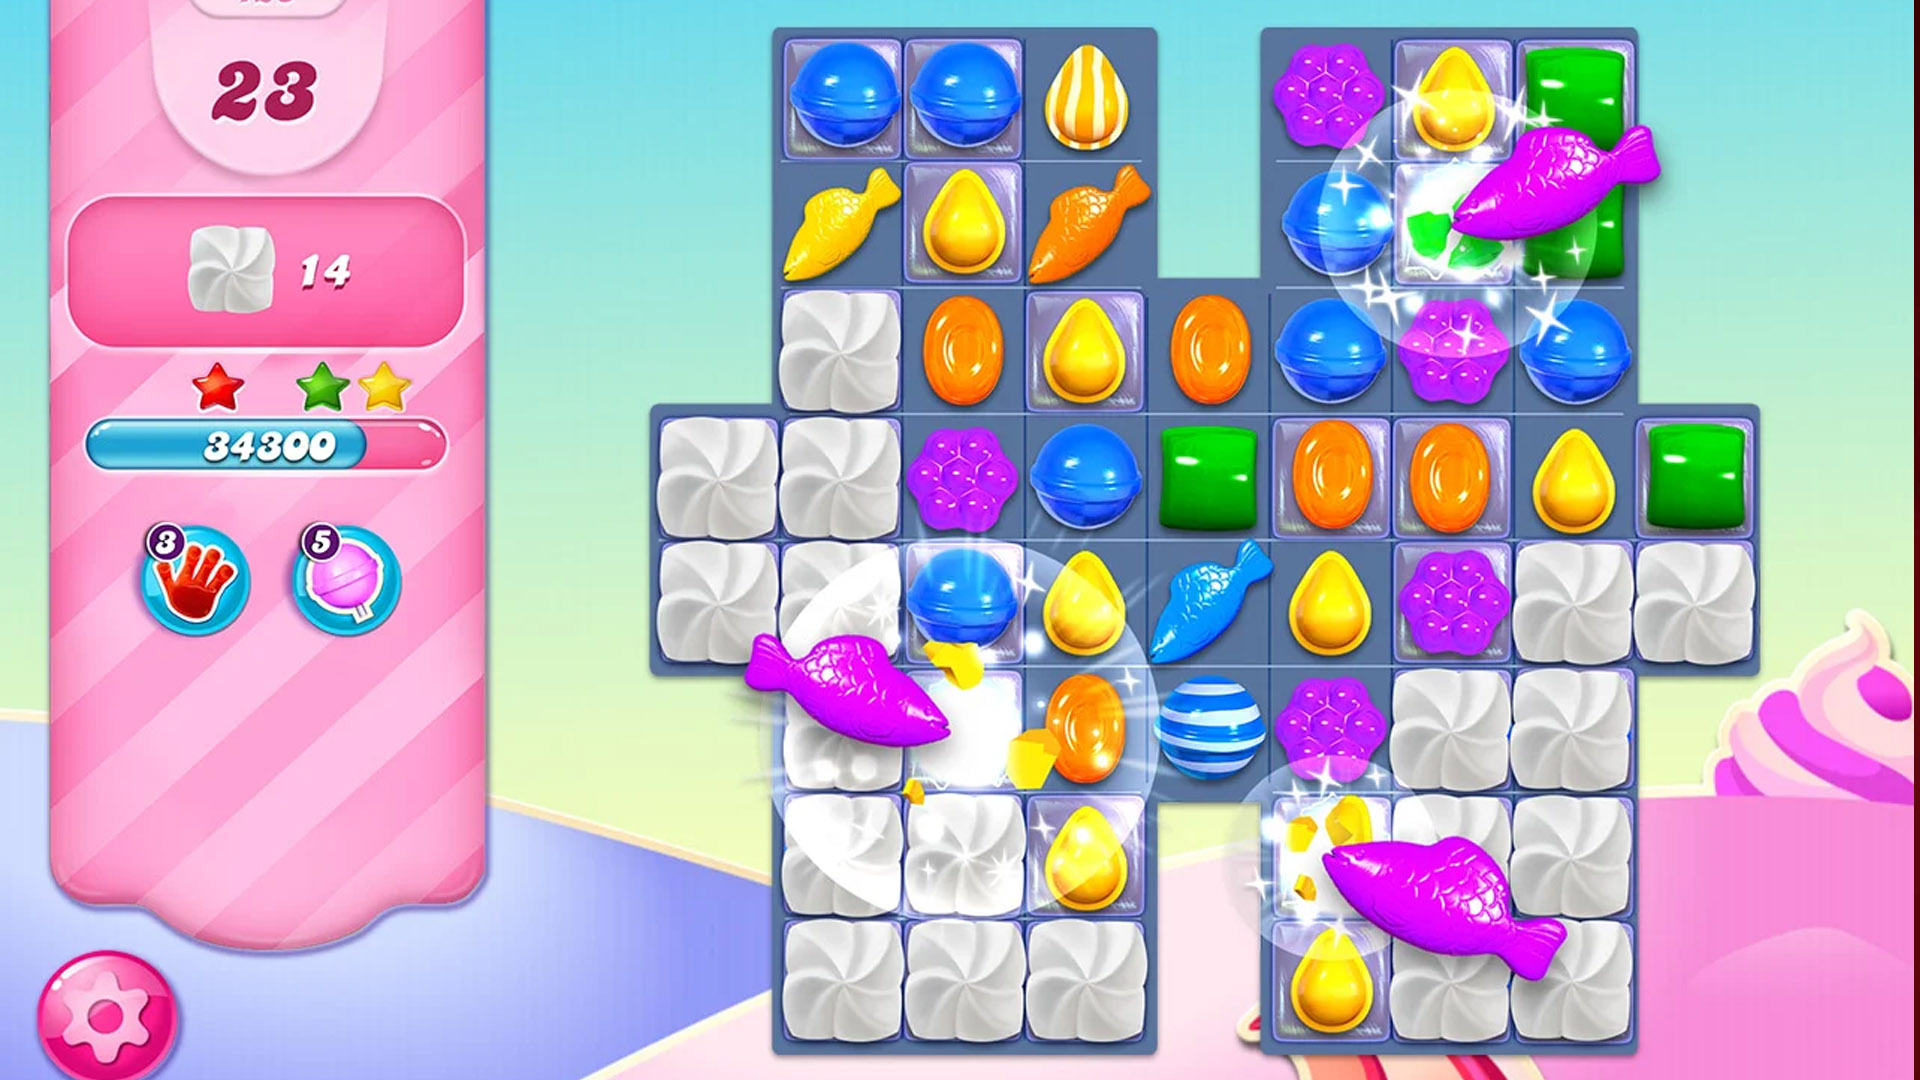 Screenshot of Candy Crush Saga gameplay